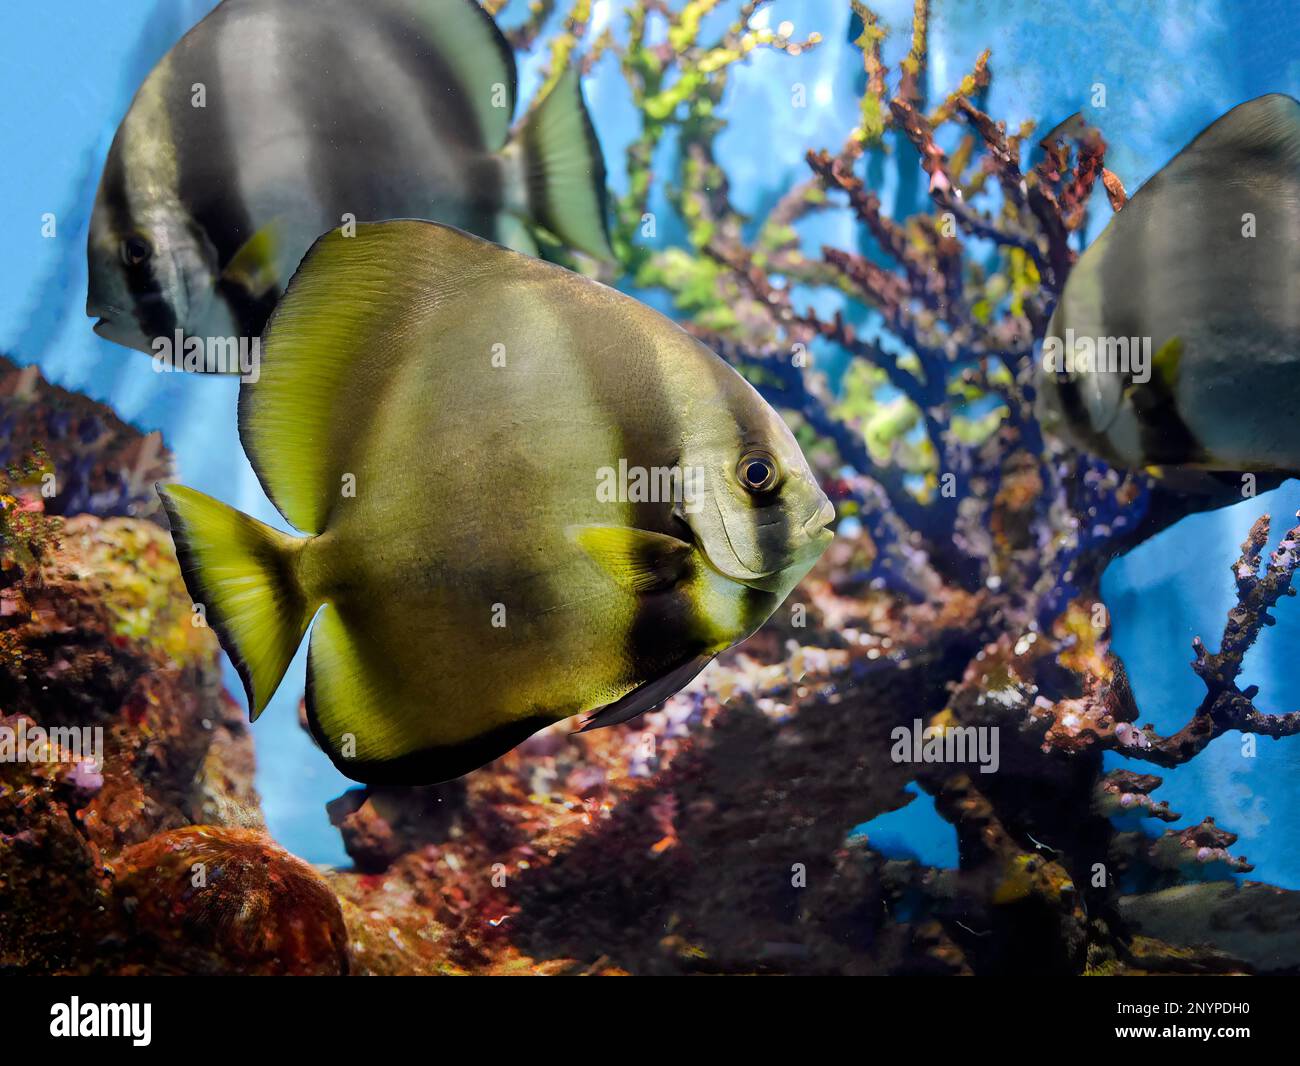 Close up of Longfin batfish, Teira Batfish, Platax Teira, swimming underwater in fish tank, Phuket Aquarium, blurred background of coral reefs Stock Photo